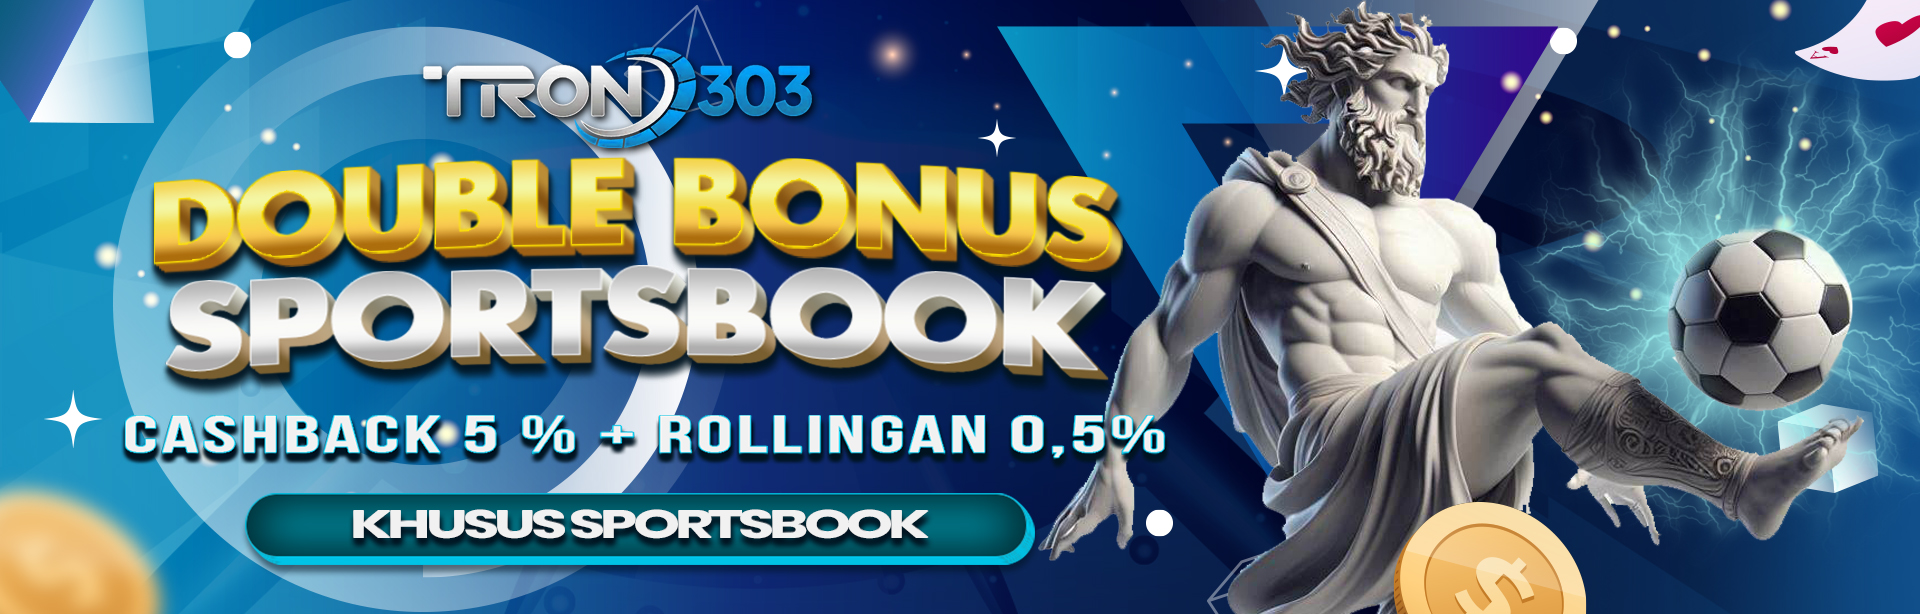 BONUS CASHBACK 5% + ROLLINGAN 0,5% SPORTSBOOK GAME